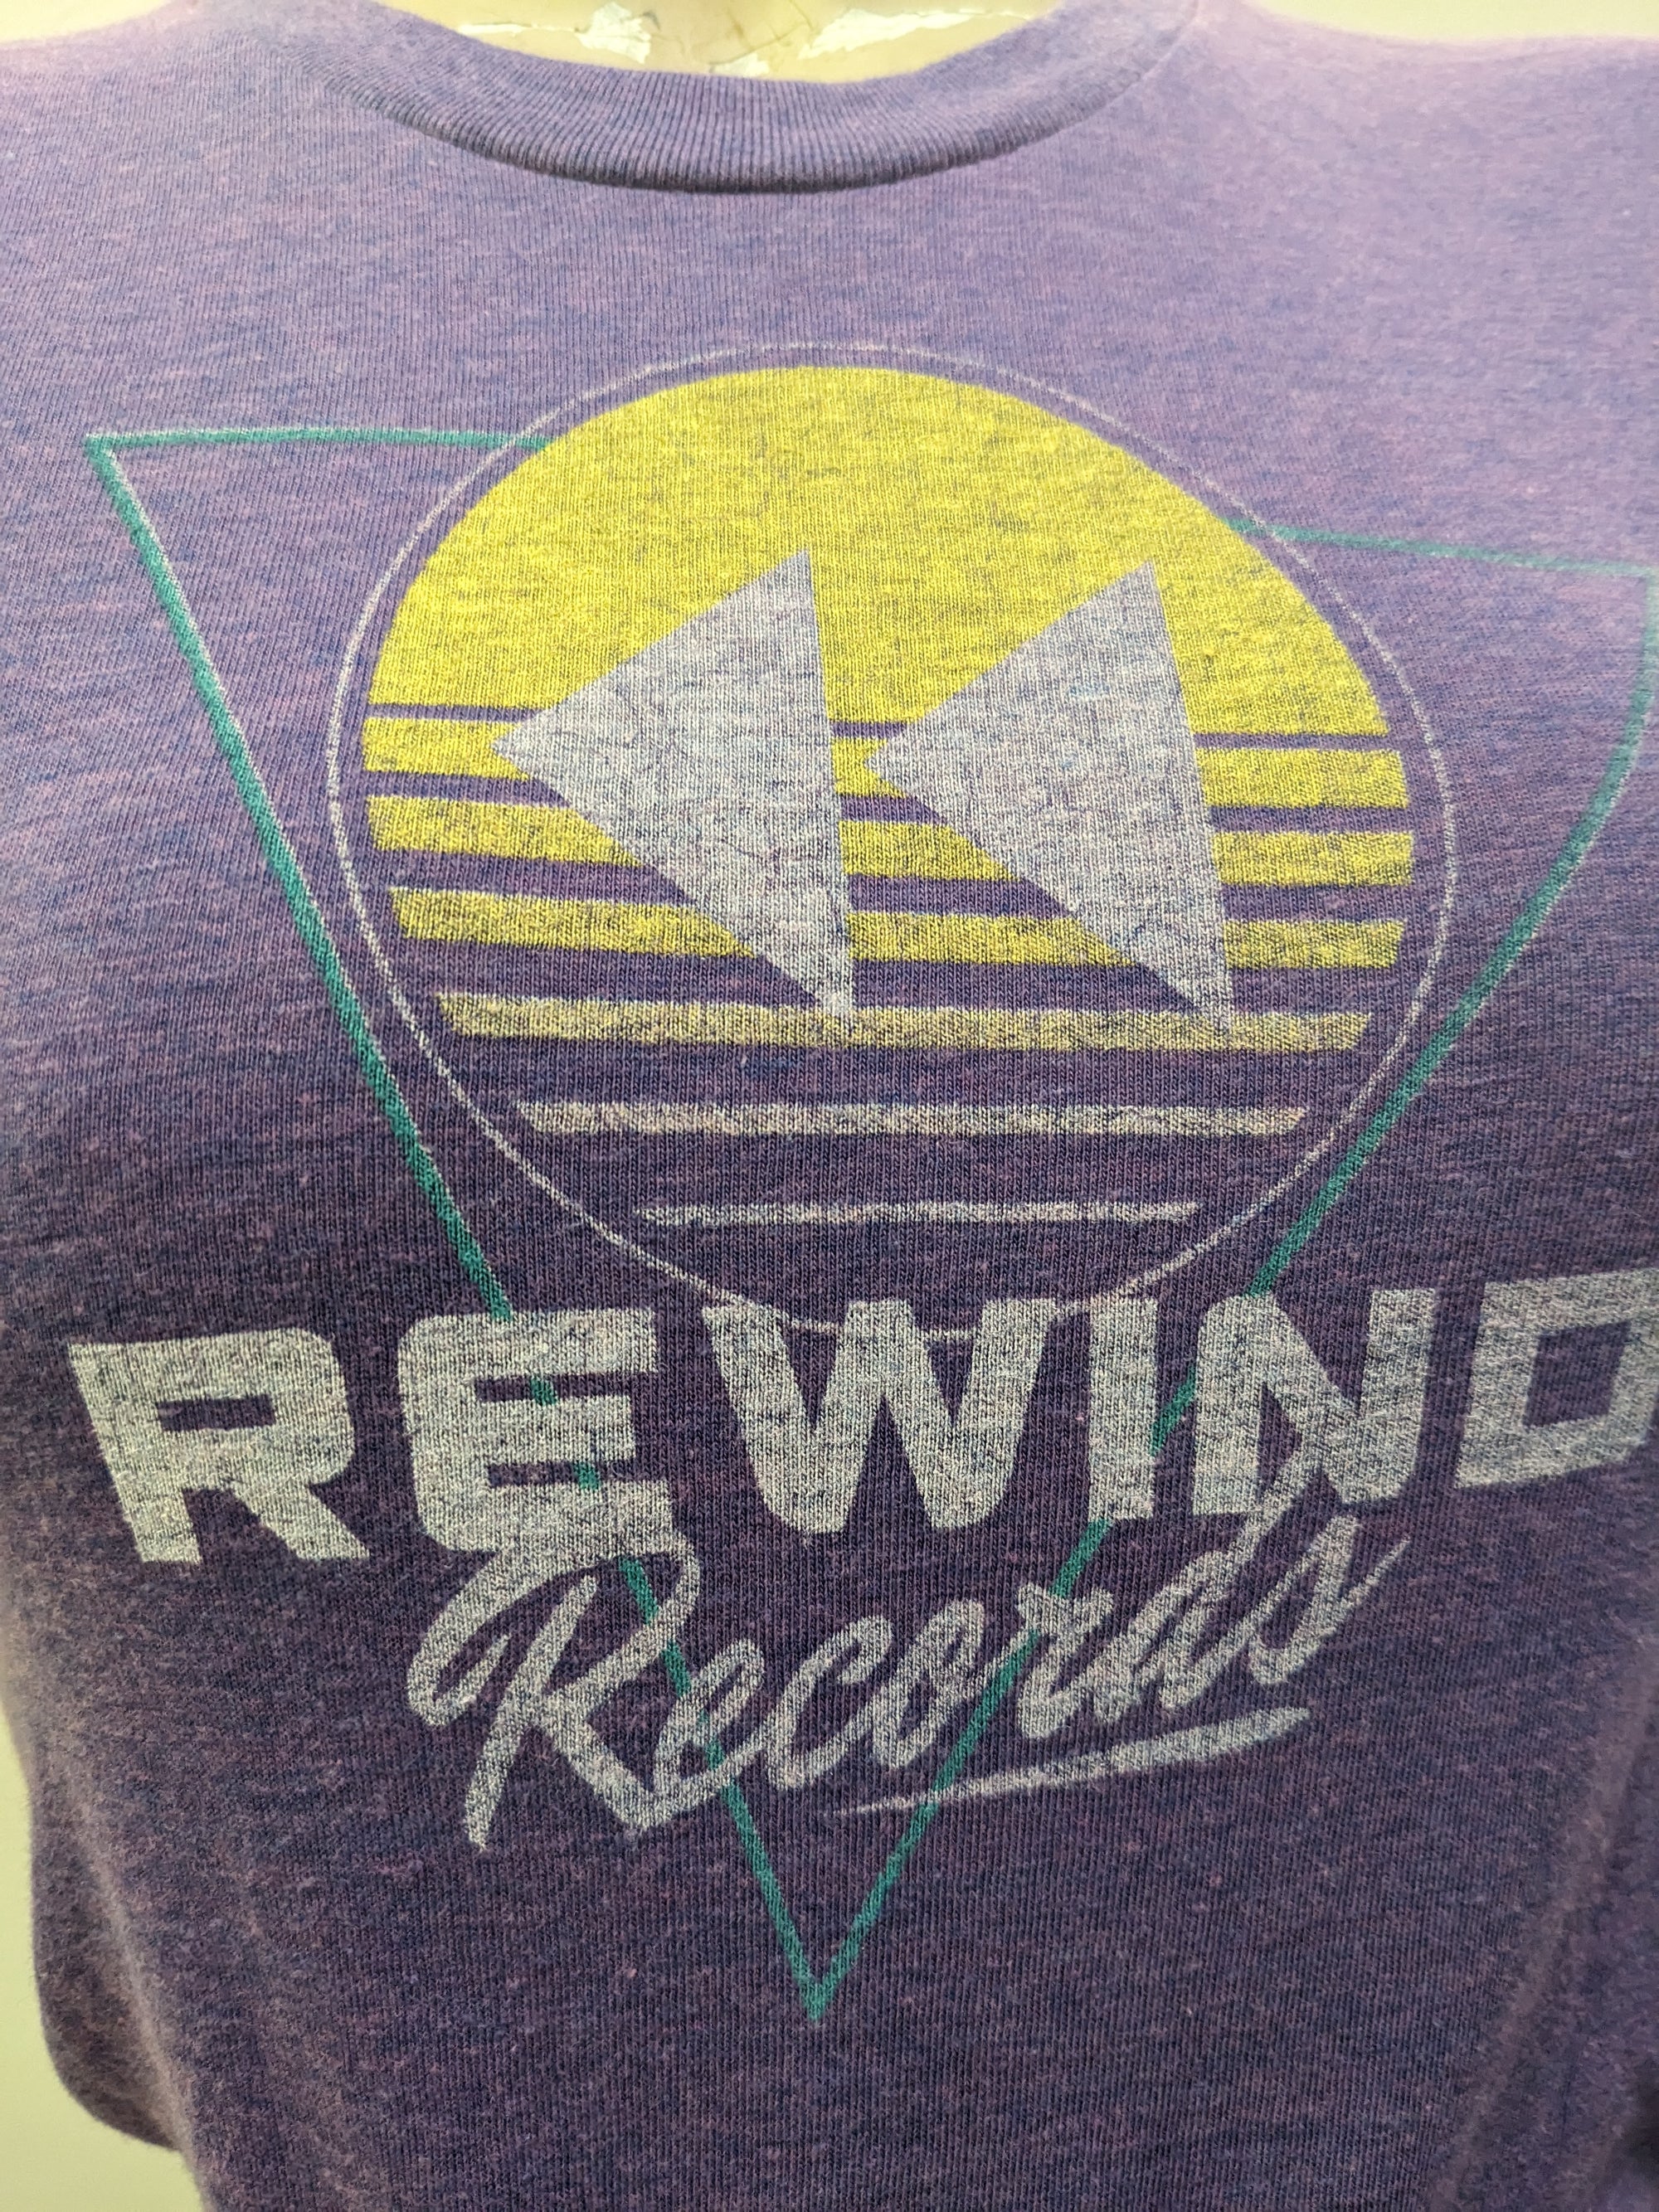 Rewind Records Tee - XS